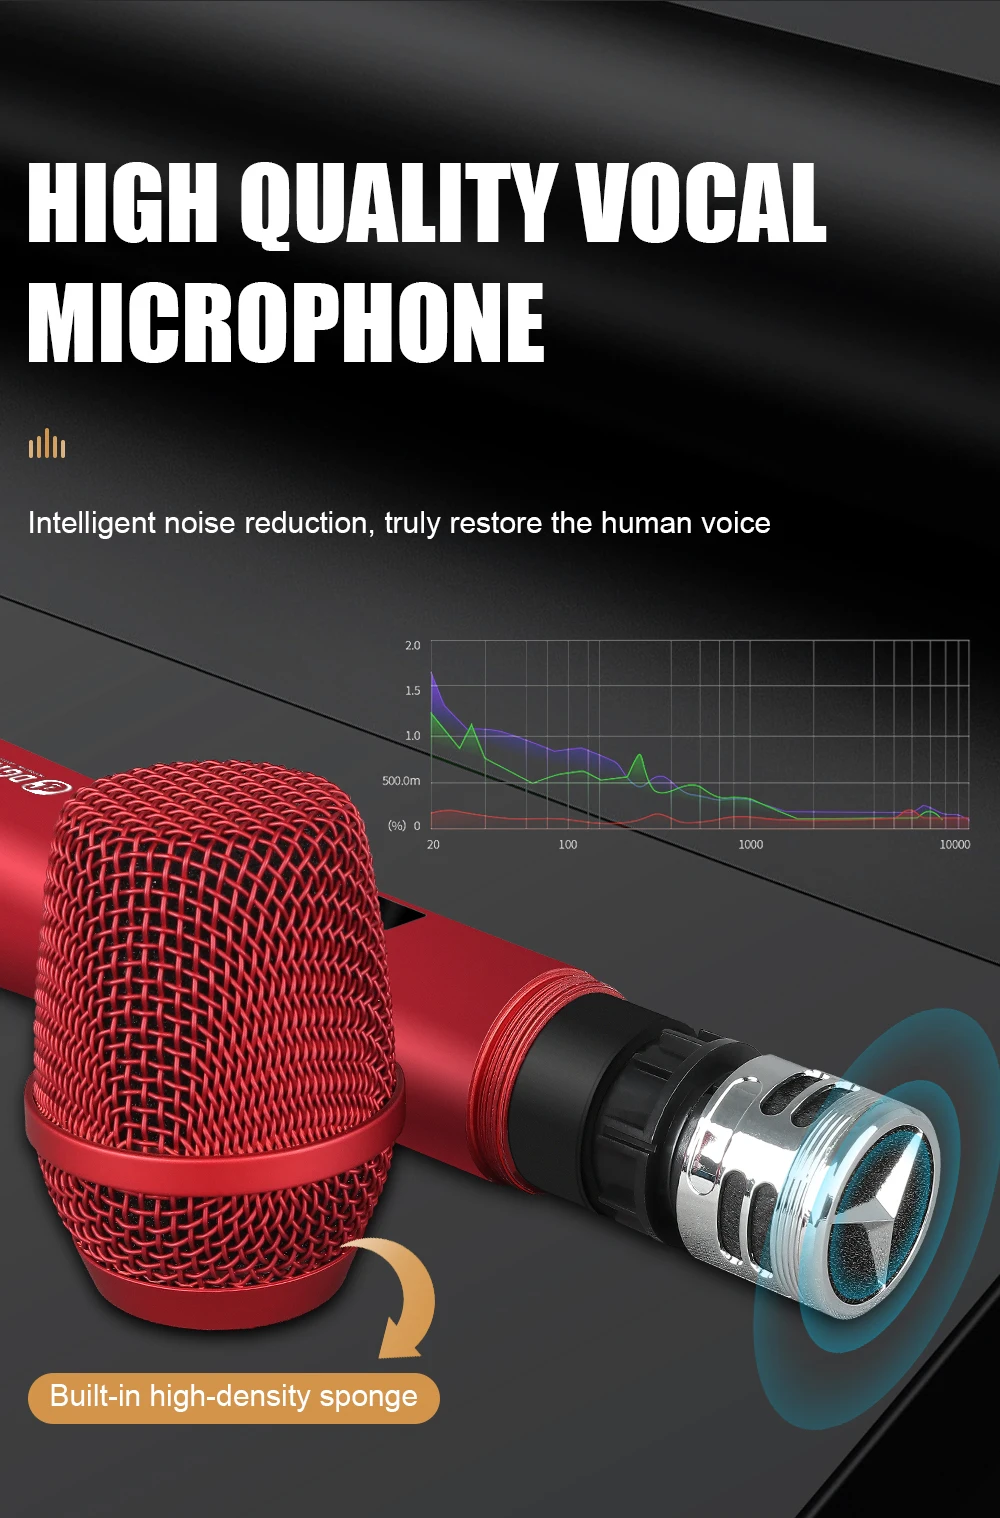 DGNOG K220S UHF Bezdrôtový Mikrofón Systém - Magnetické Batérie, Rozšírený Rozsah, Výnimočnú Audio